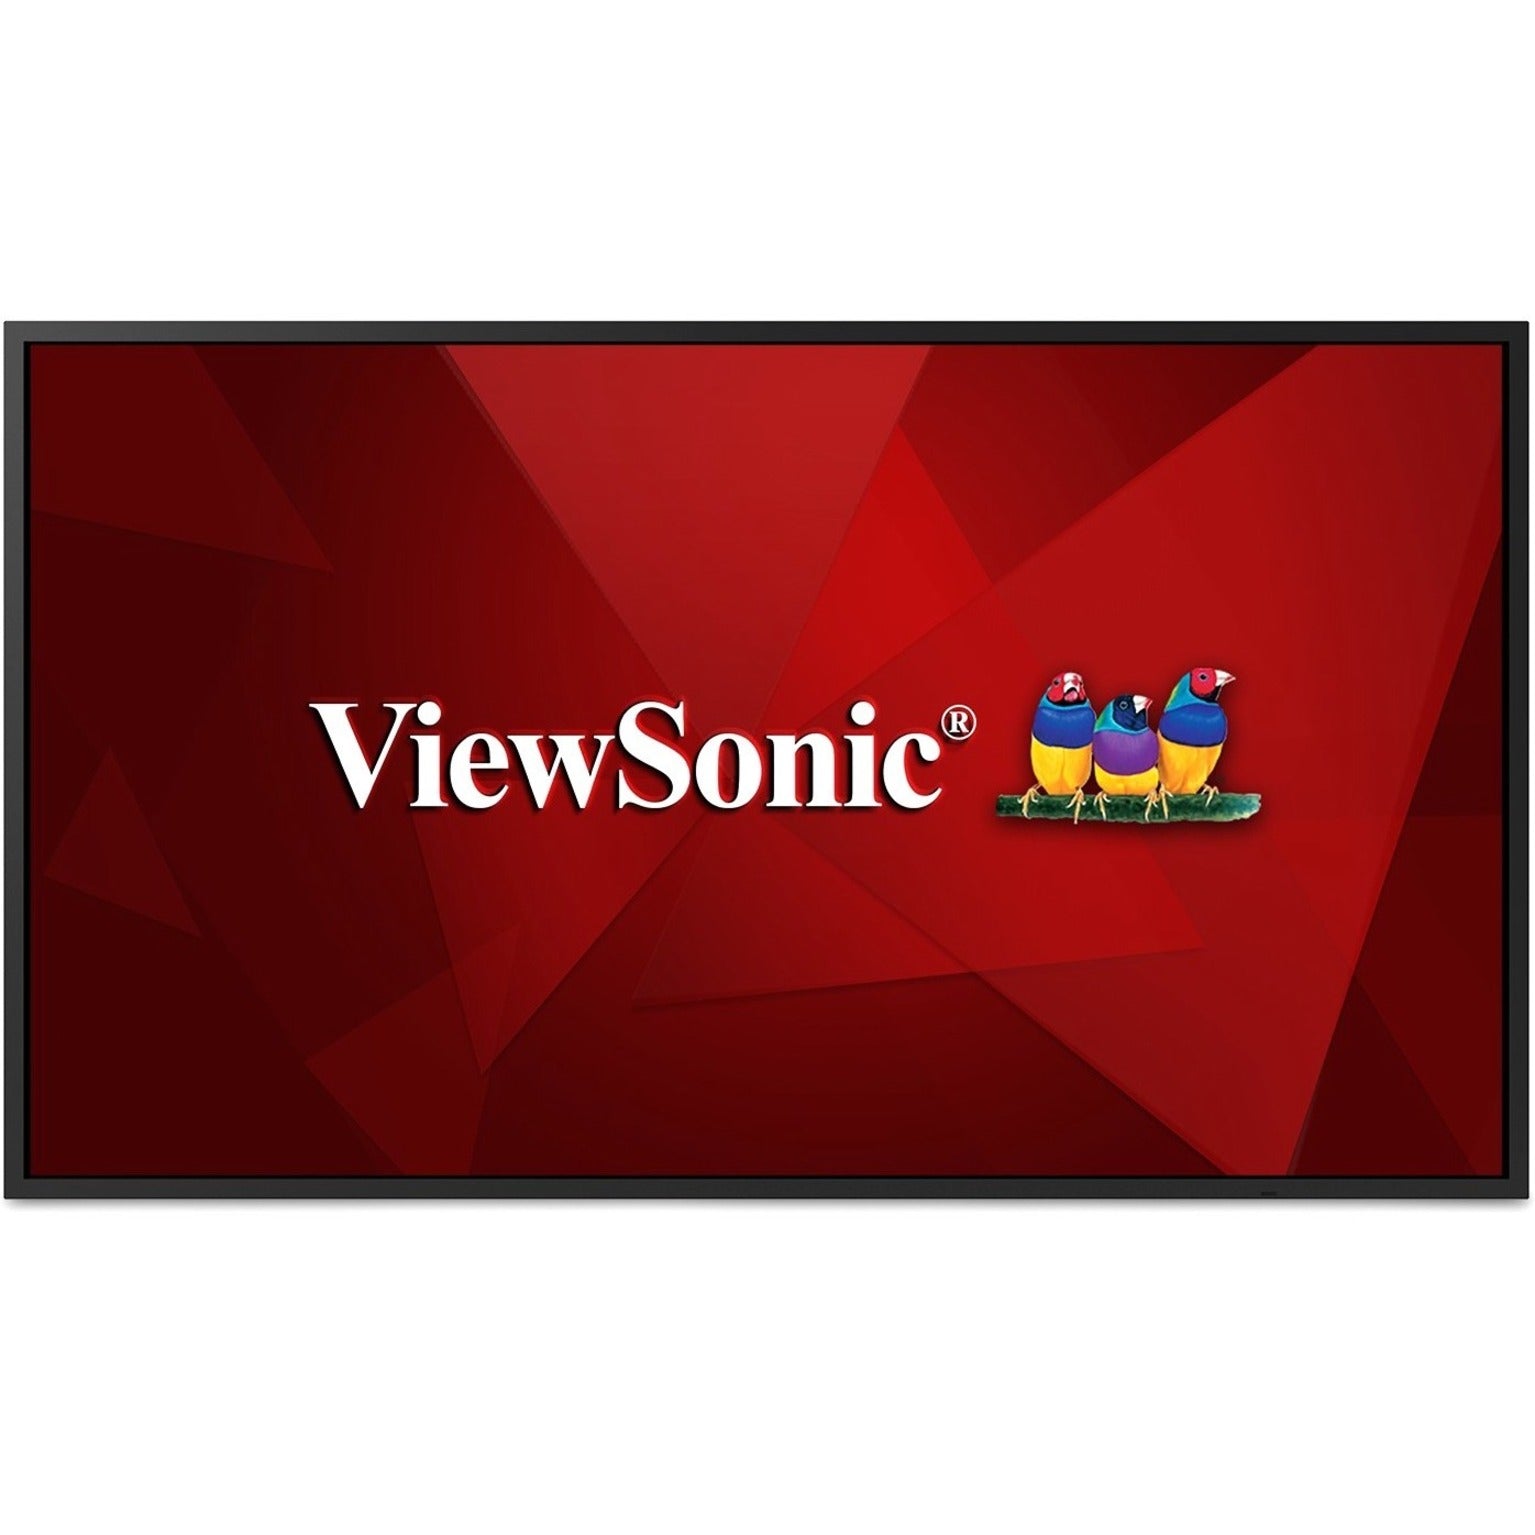 ViewSonic CDE4320 43" 4K UHD LED Commercial Display, 350 Nits, HDMI x 2, DVI x 1, IR in/out x 1, RS232 in x 1, USB x 2, Audio out x 1, Speaker 10W x 2, RJ45 x 1, Black